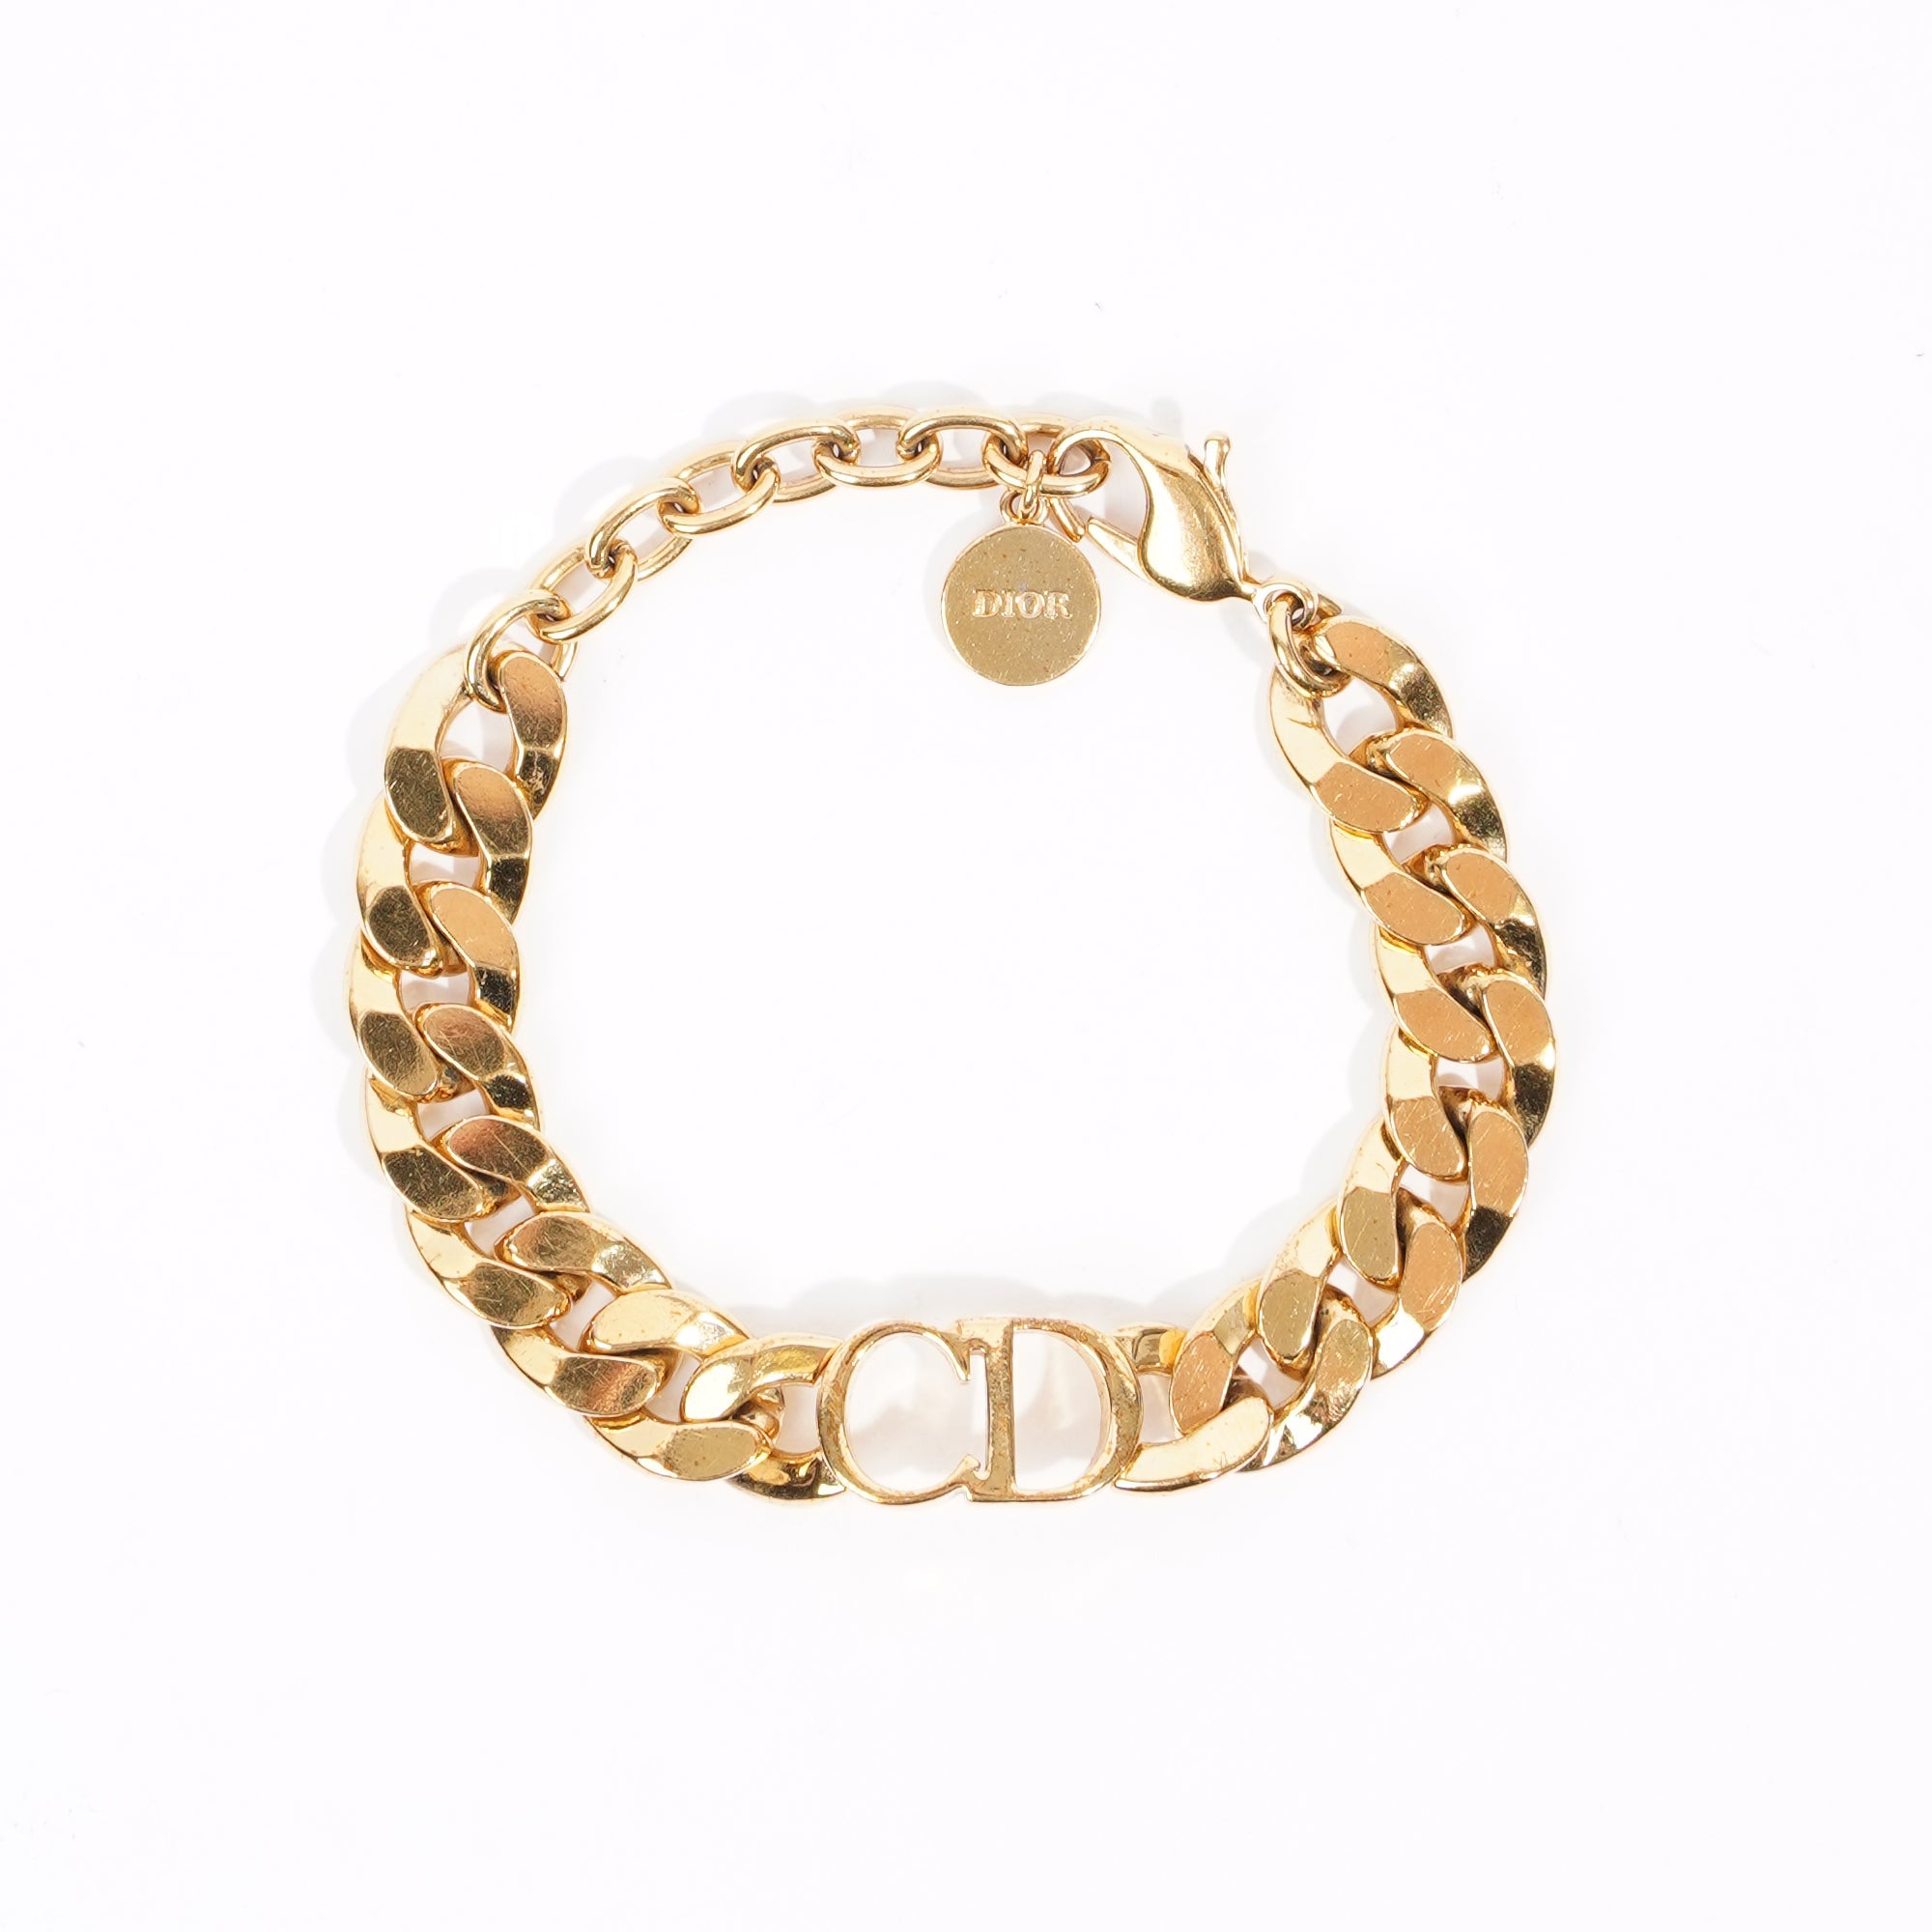 Danseuse Etoile choker - Fashion Jewellery - Woman | DIOR Dior | Jewelry,  Chokers, Women jewelry